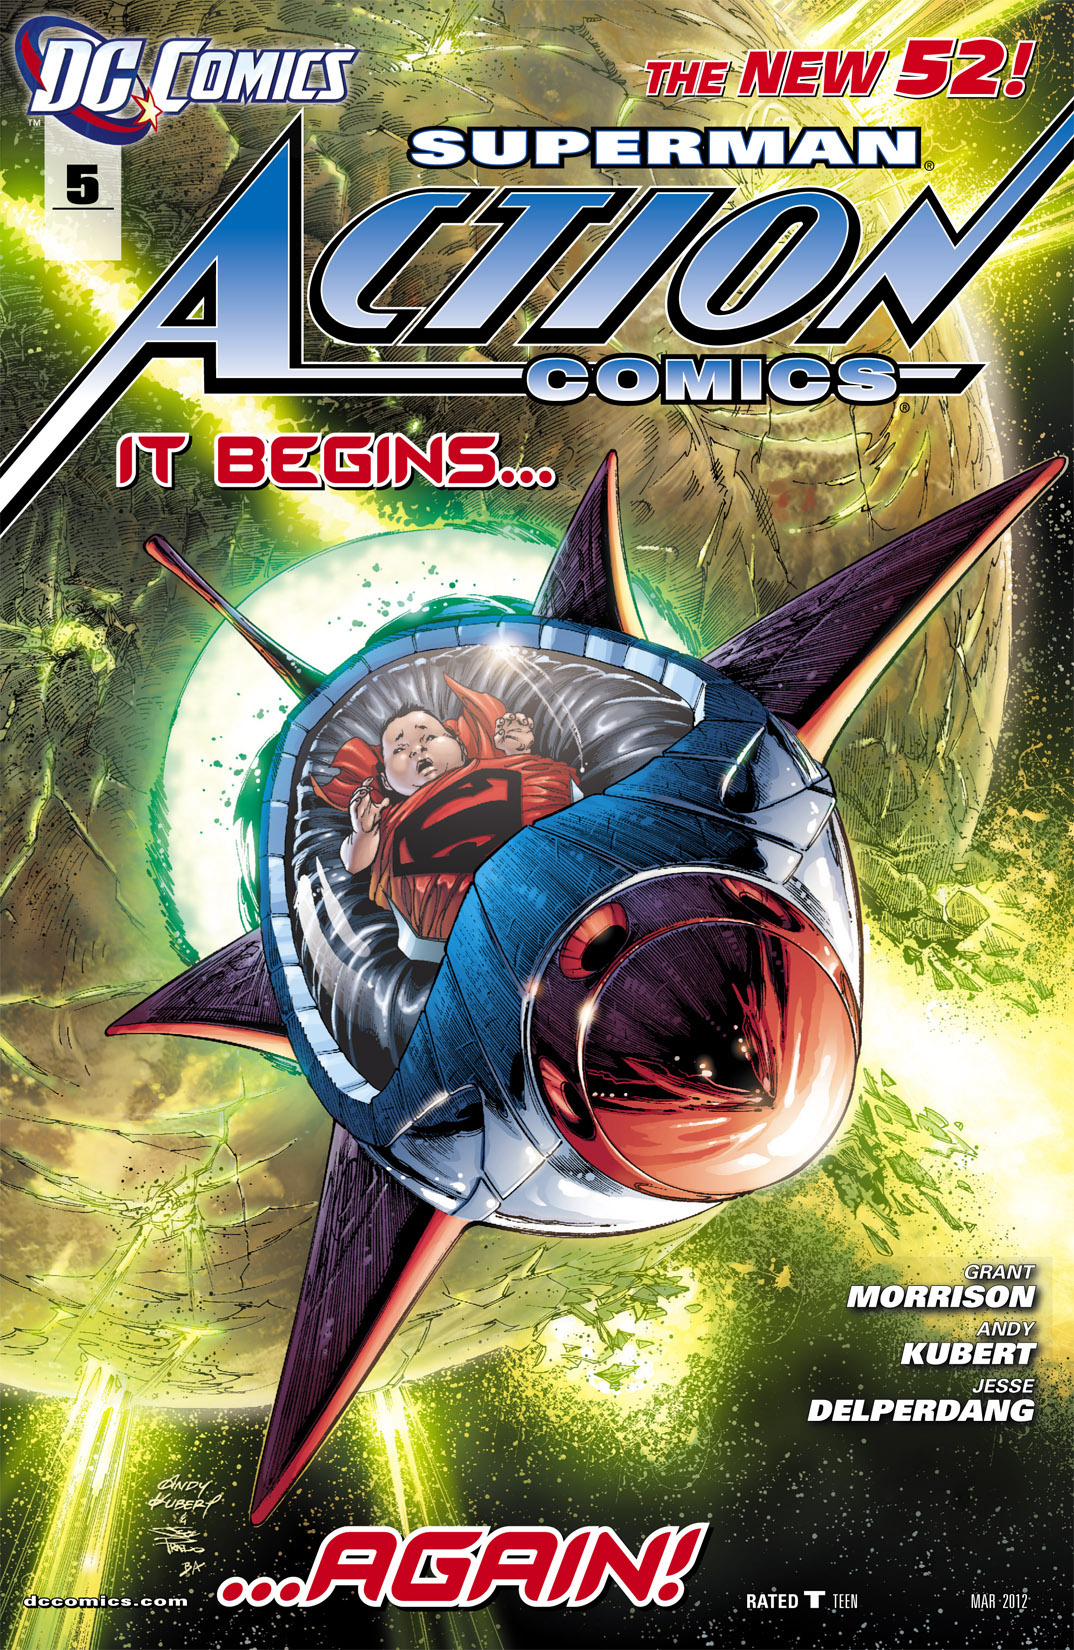 Action Comics (2011-) #5 preview images